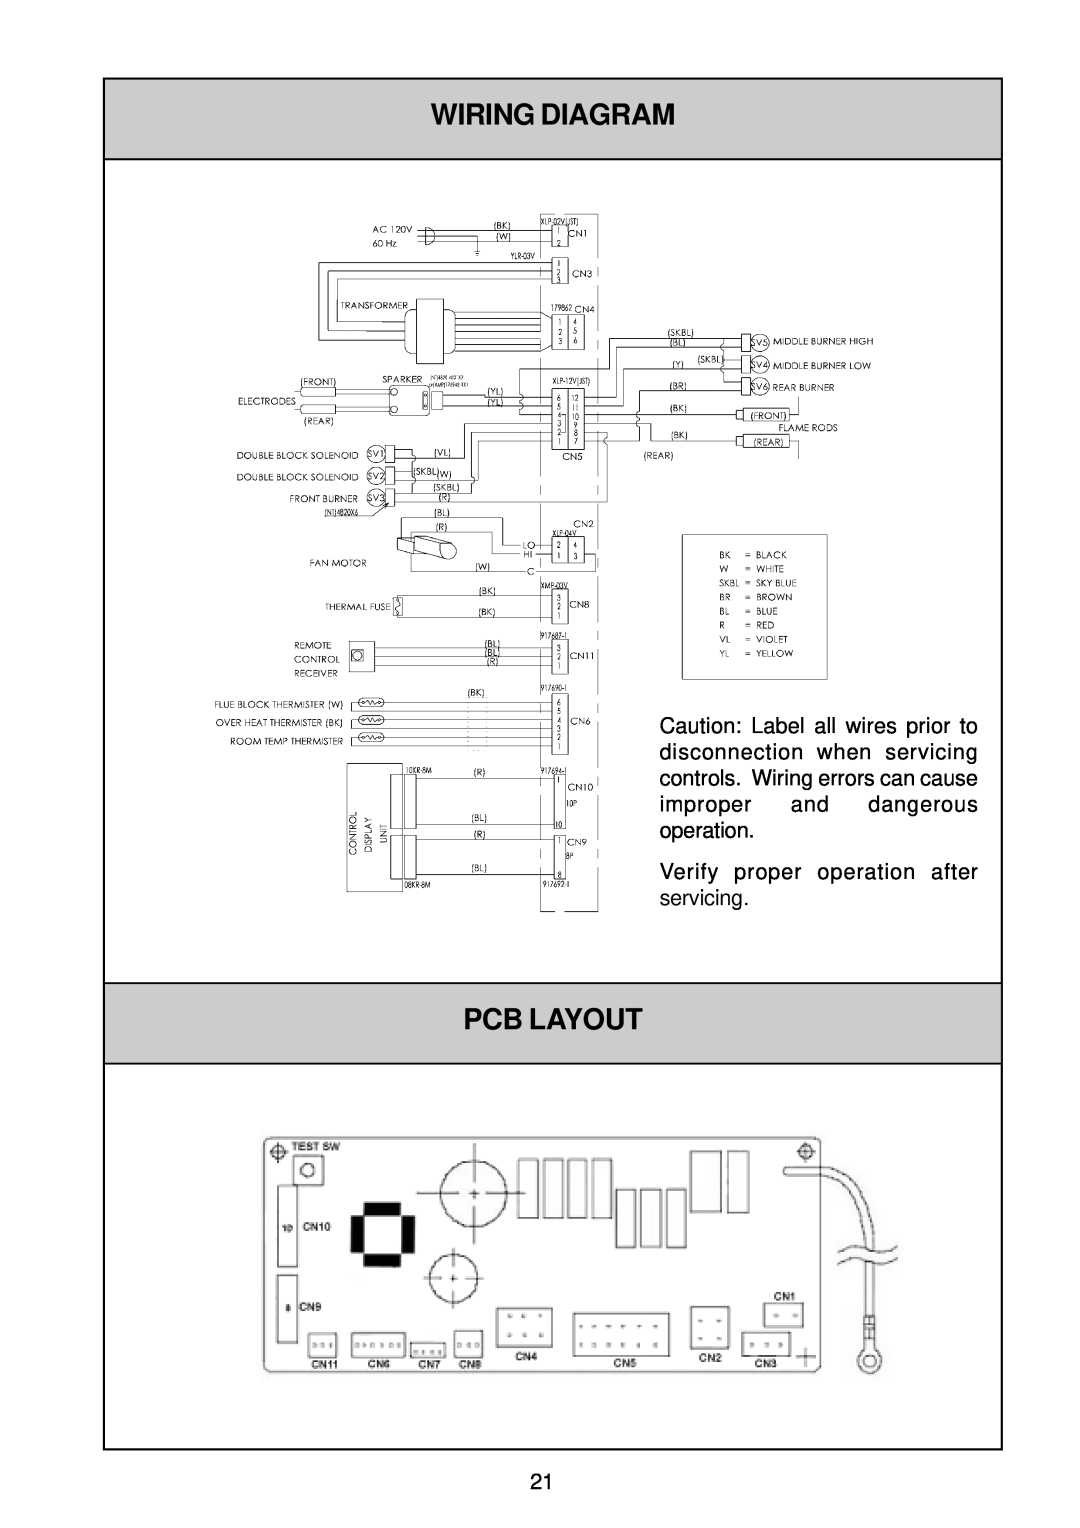 Rinnai IB35ETRN, IB35ETRLC installation manual Wiring Diagram, Pcb Layout, Verify proper operation after servicing 